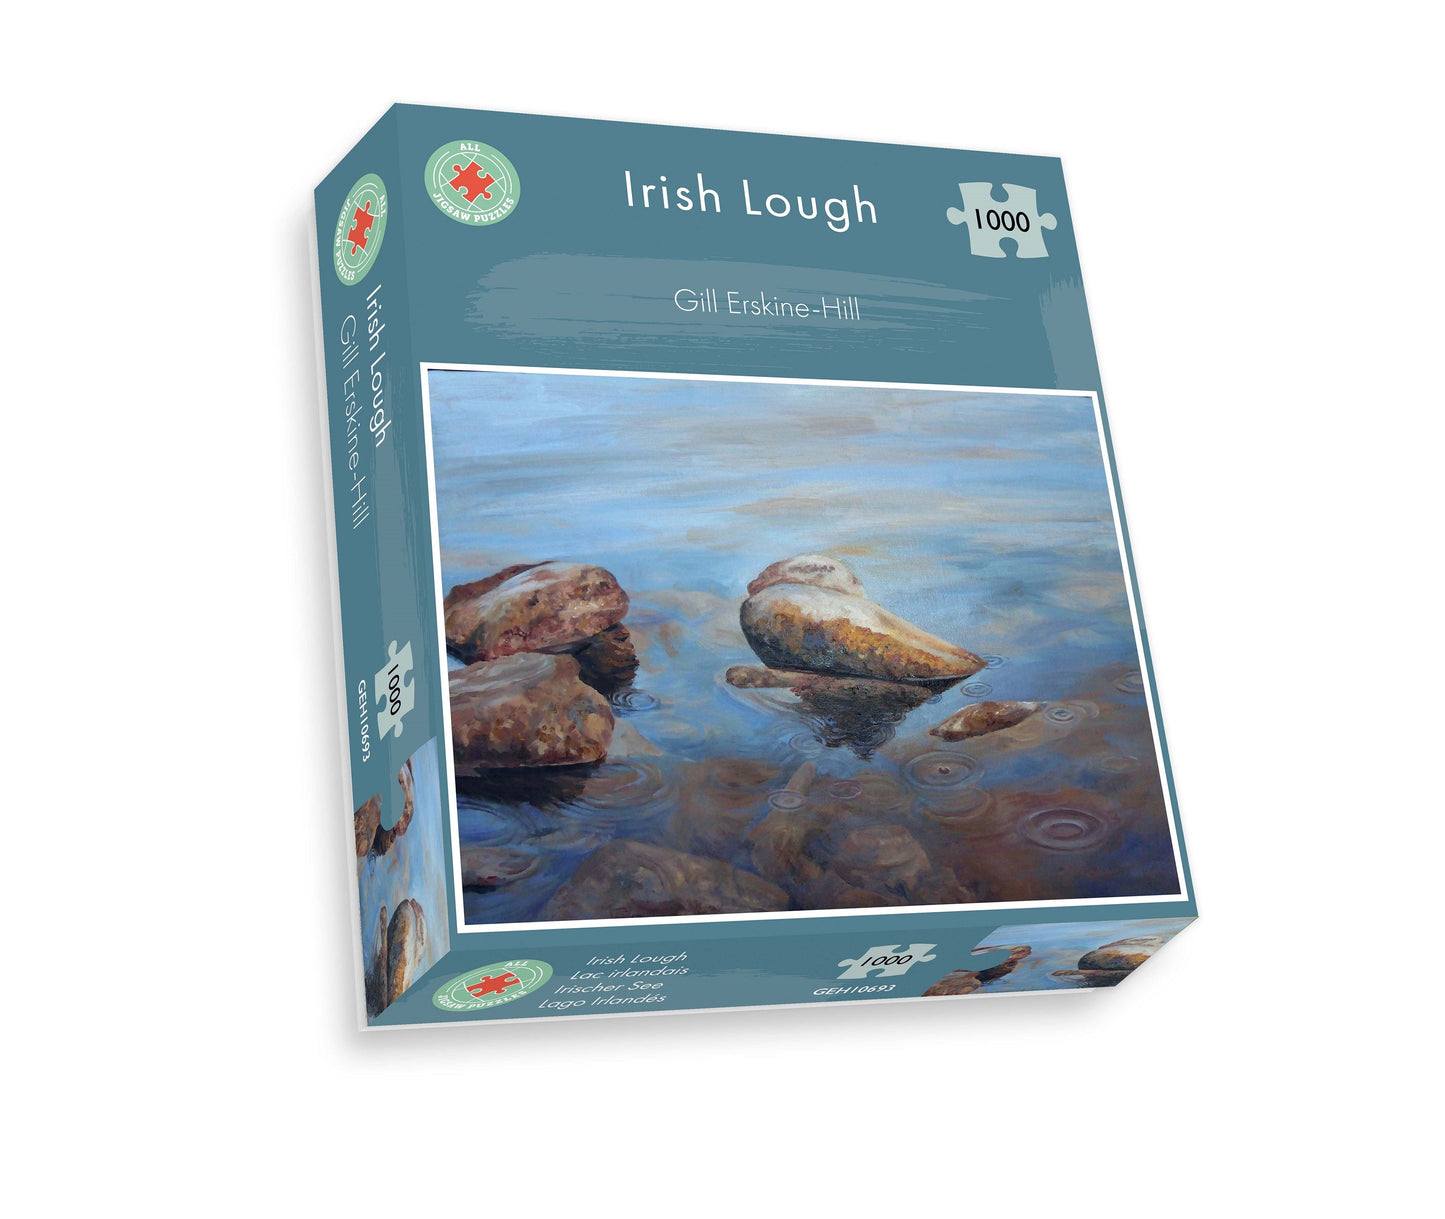 Irish Lough 1000 piece Jigsaw Puzzle - Gill Erskine-Hill